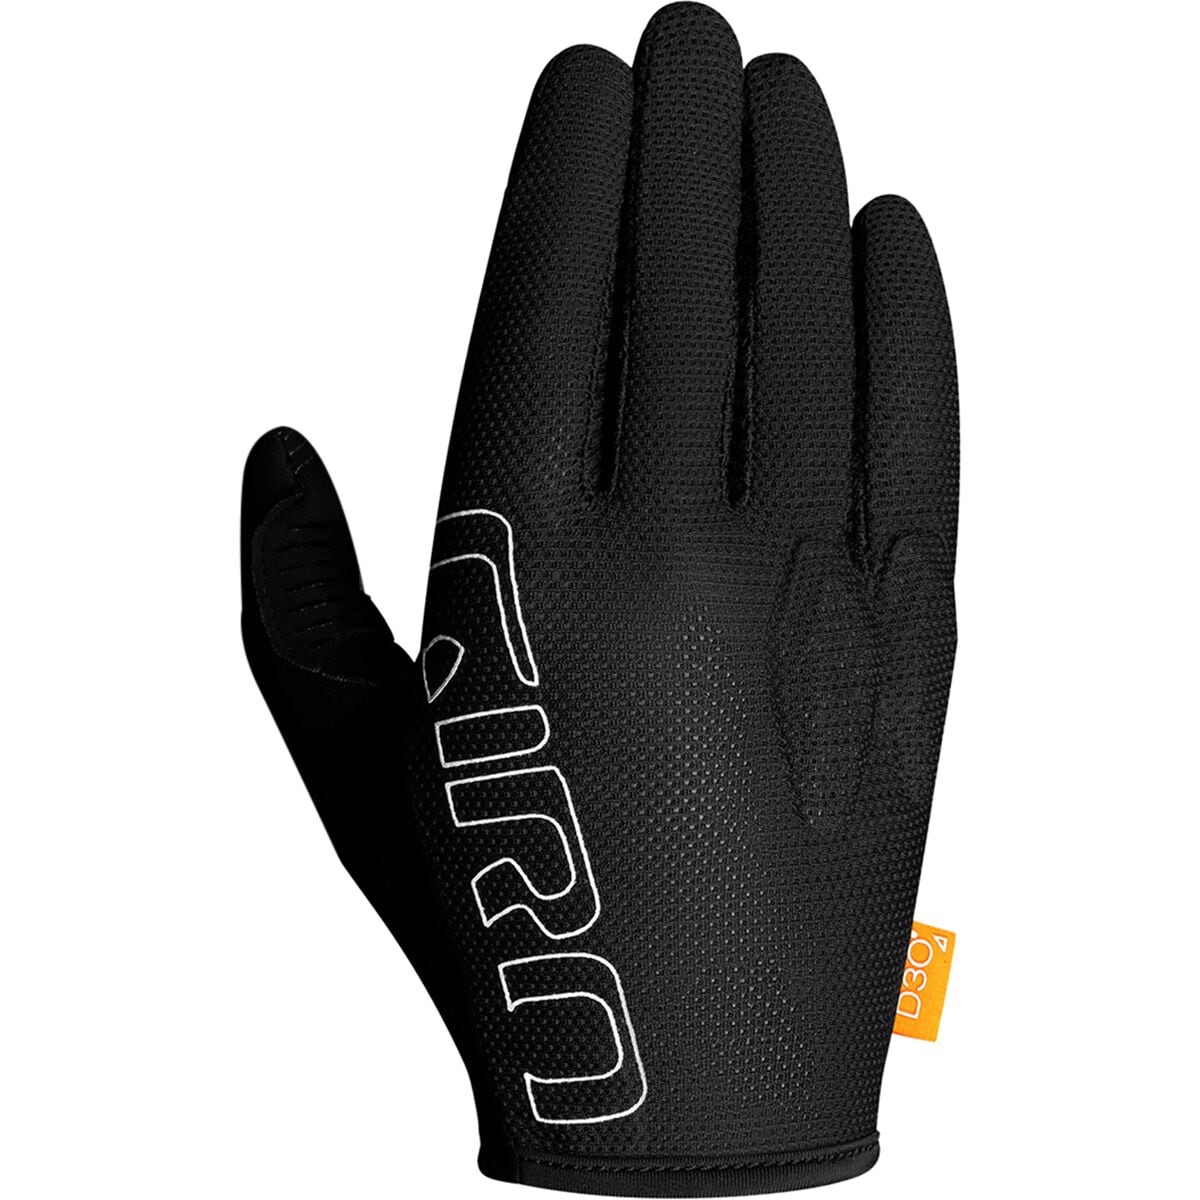 Giro Rodeo Glove - Men's Black, XL